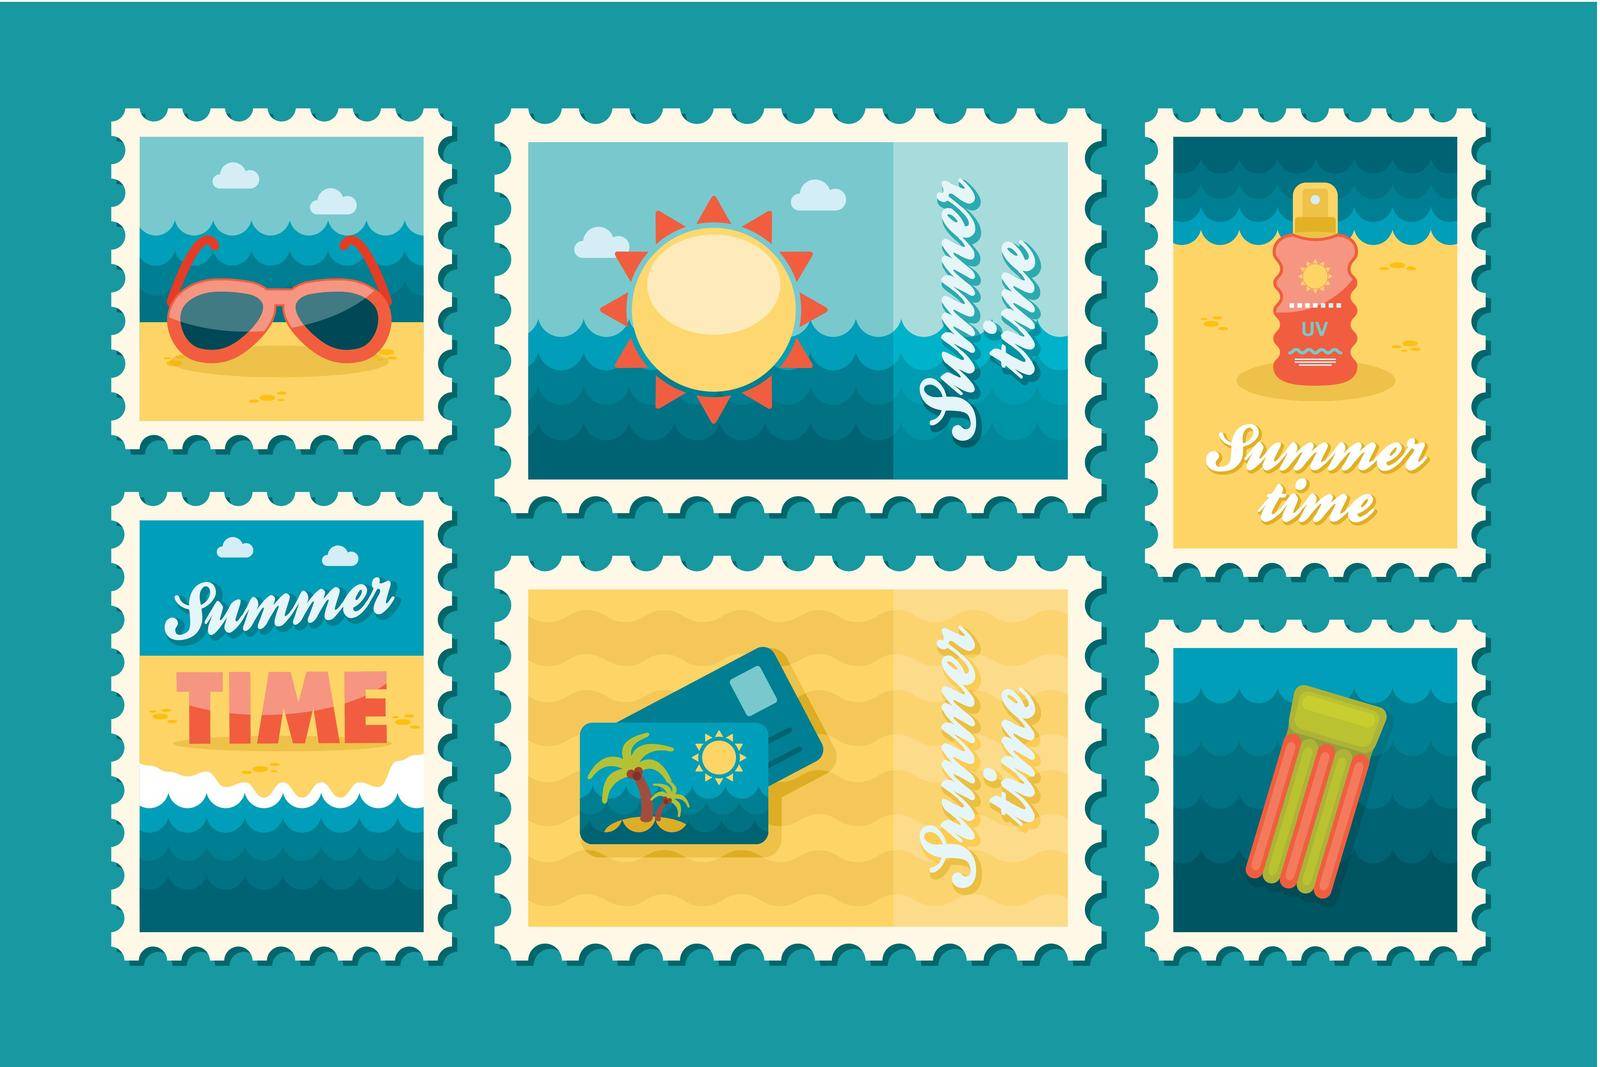 Summertime stamp set flat by nosik